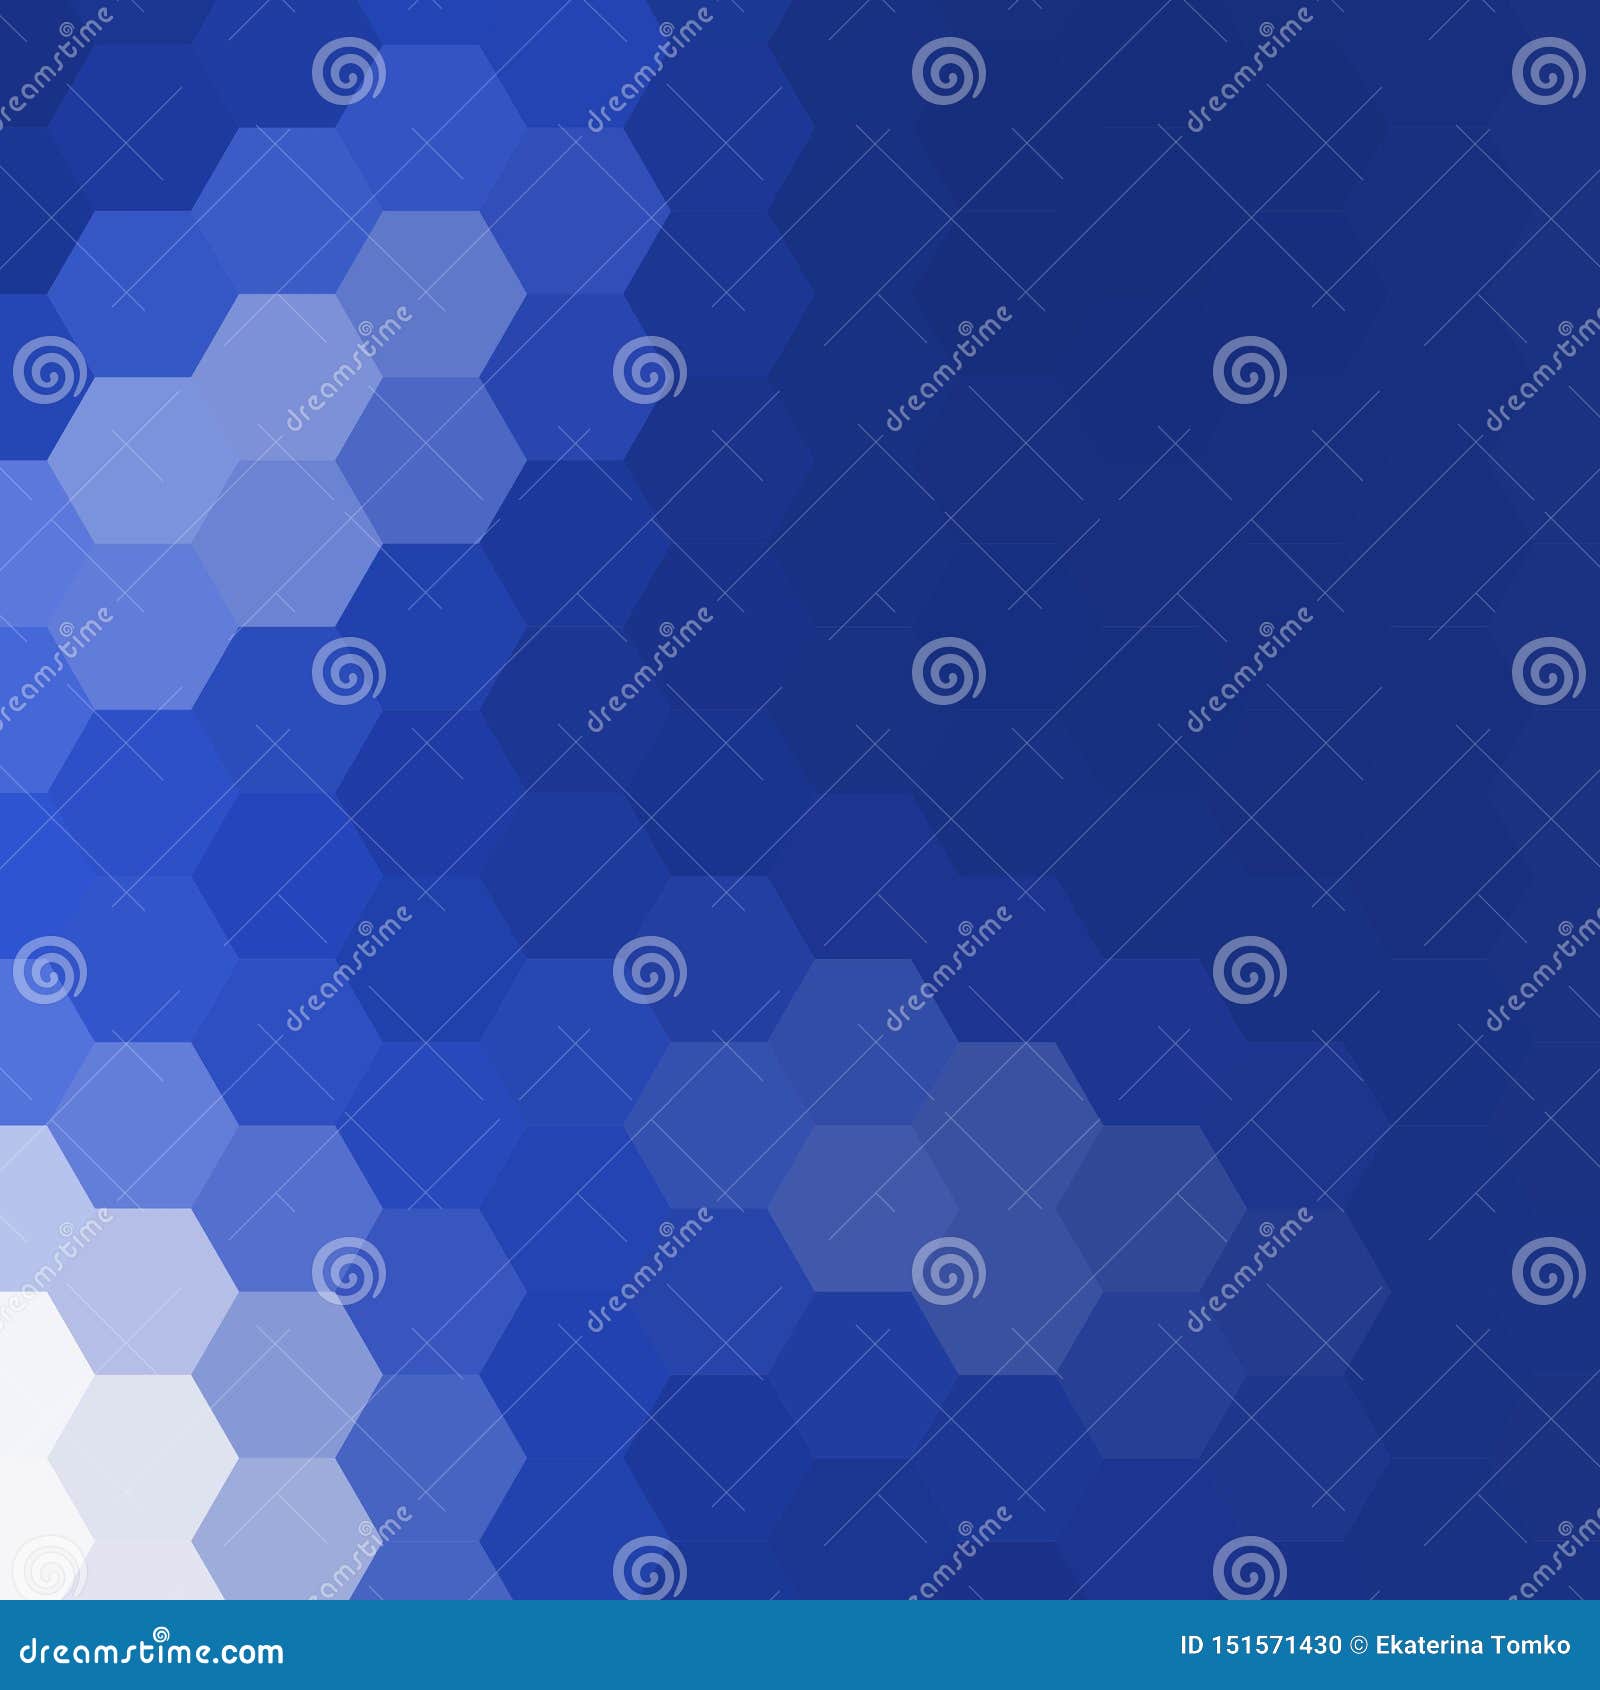 Blue Honeycomb Advertising Layouts Vektorgrafik Abstract Vector Background Stock Illustration Illustration Of Background Vector